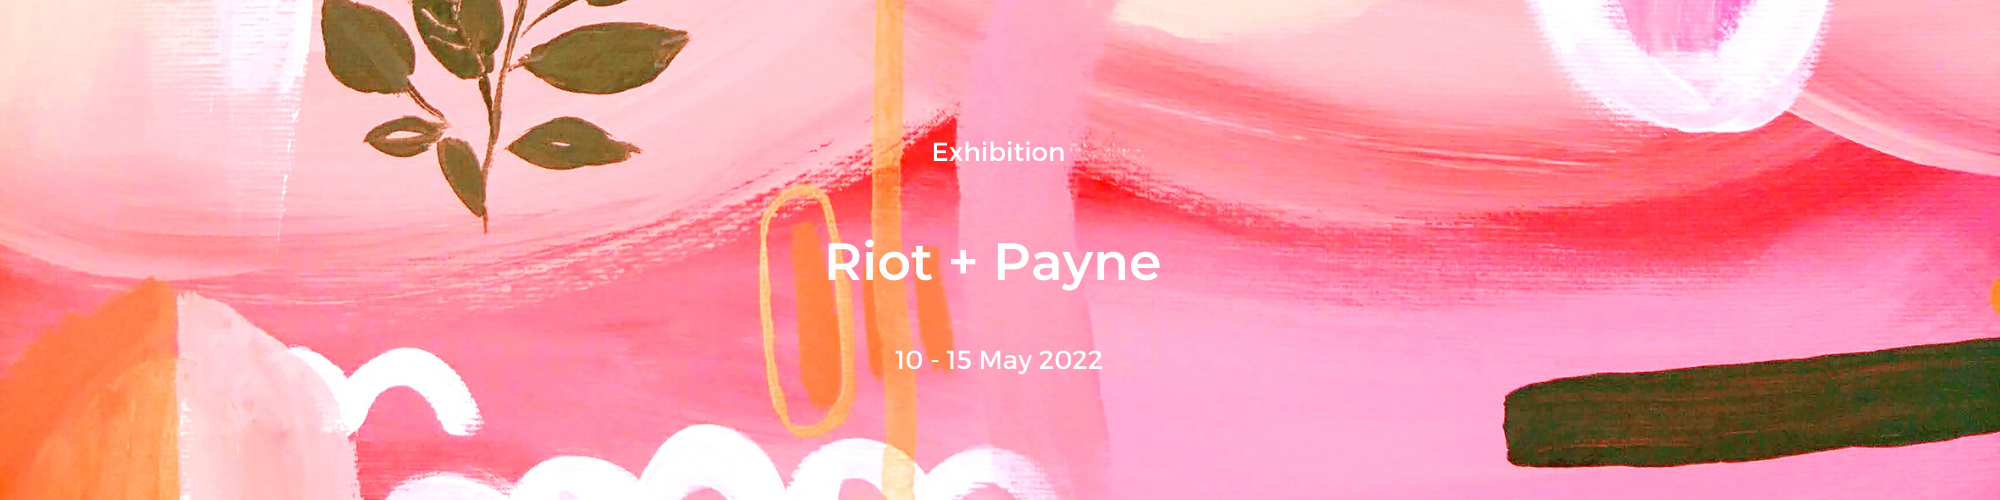 Riot + Payne Exhibition